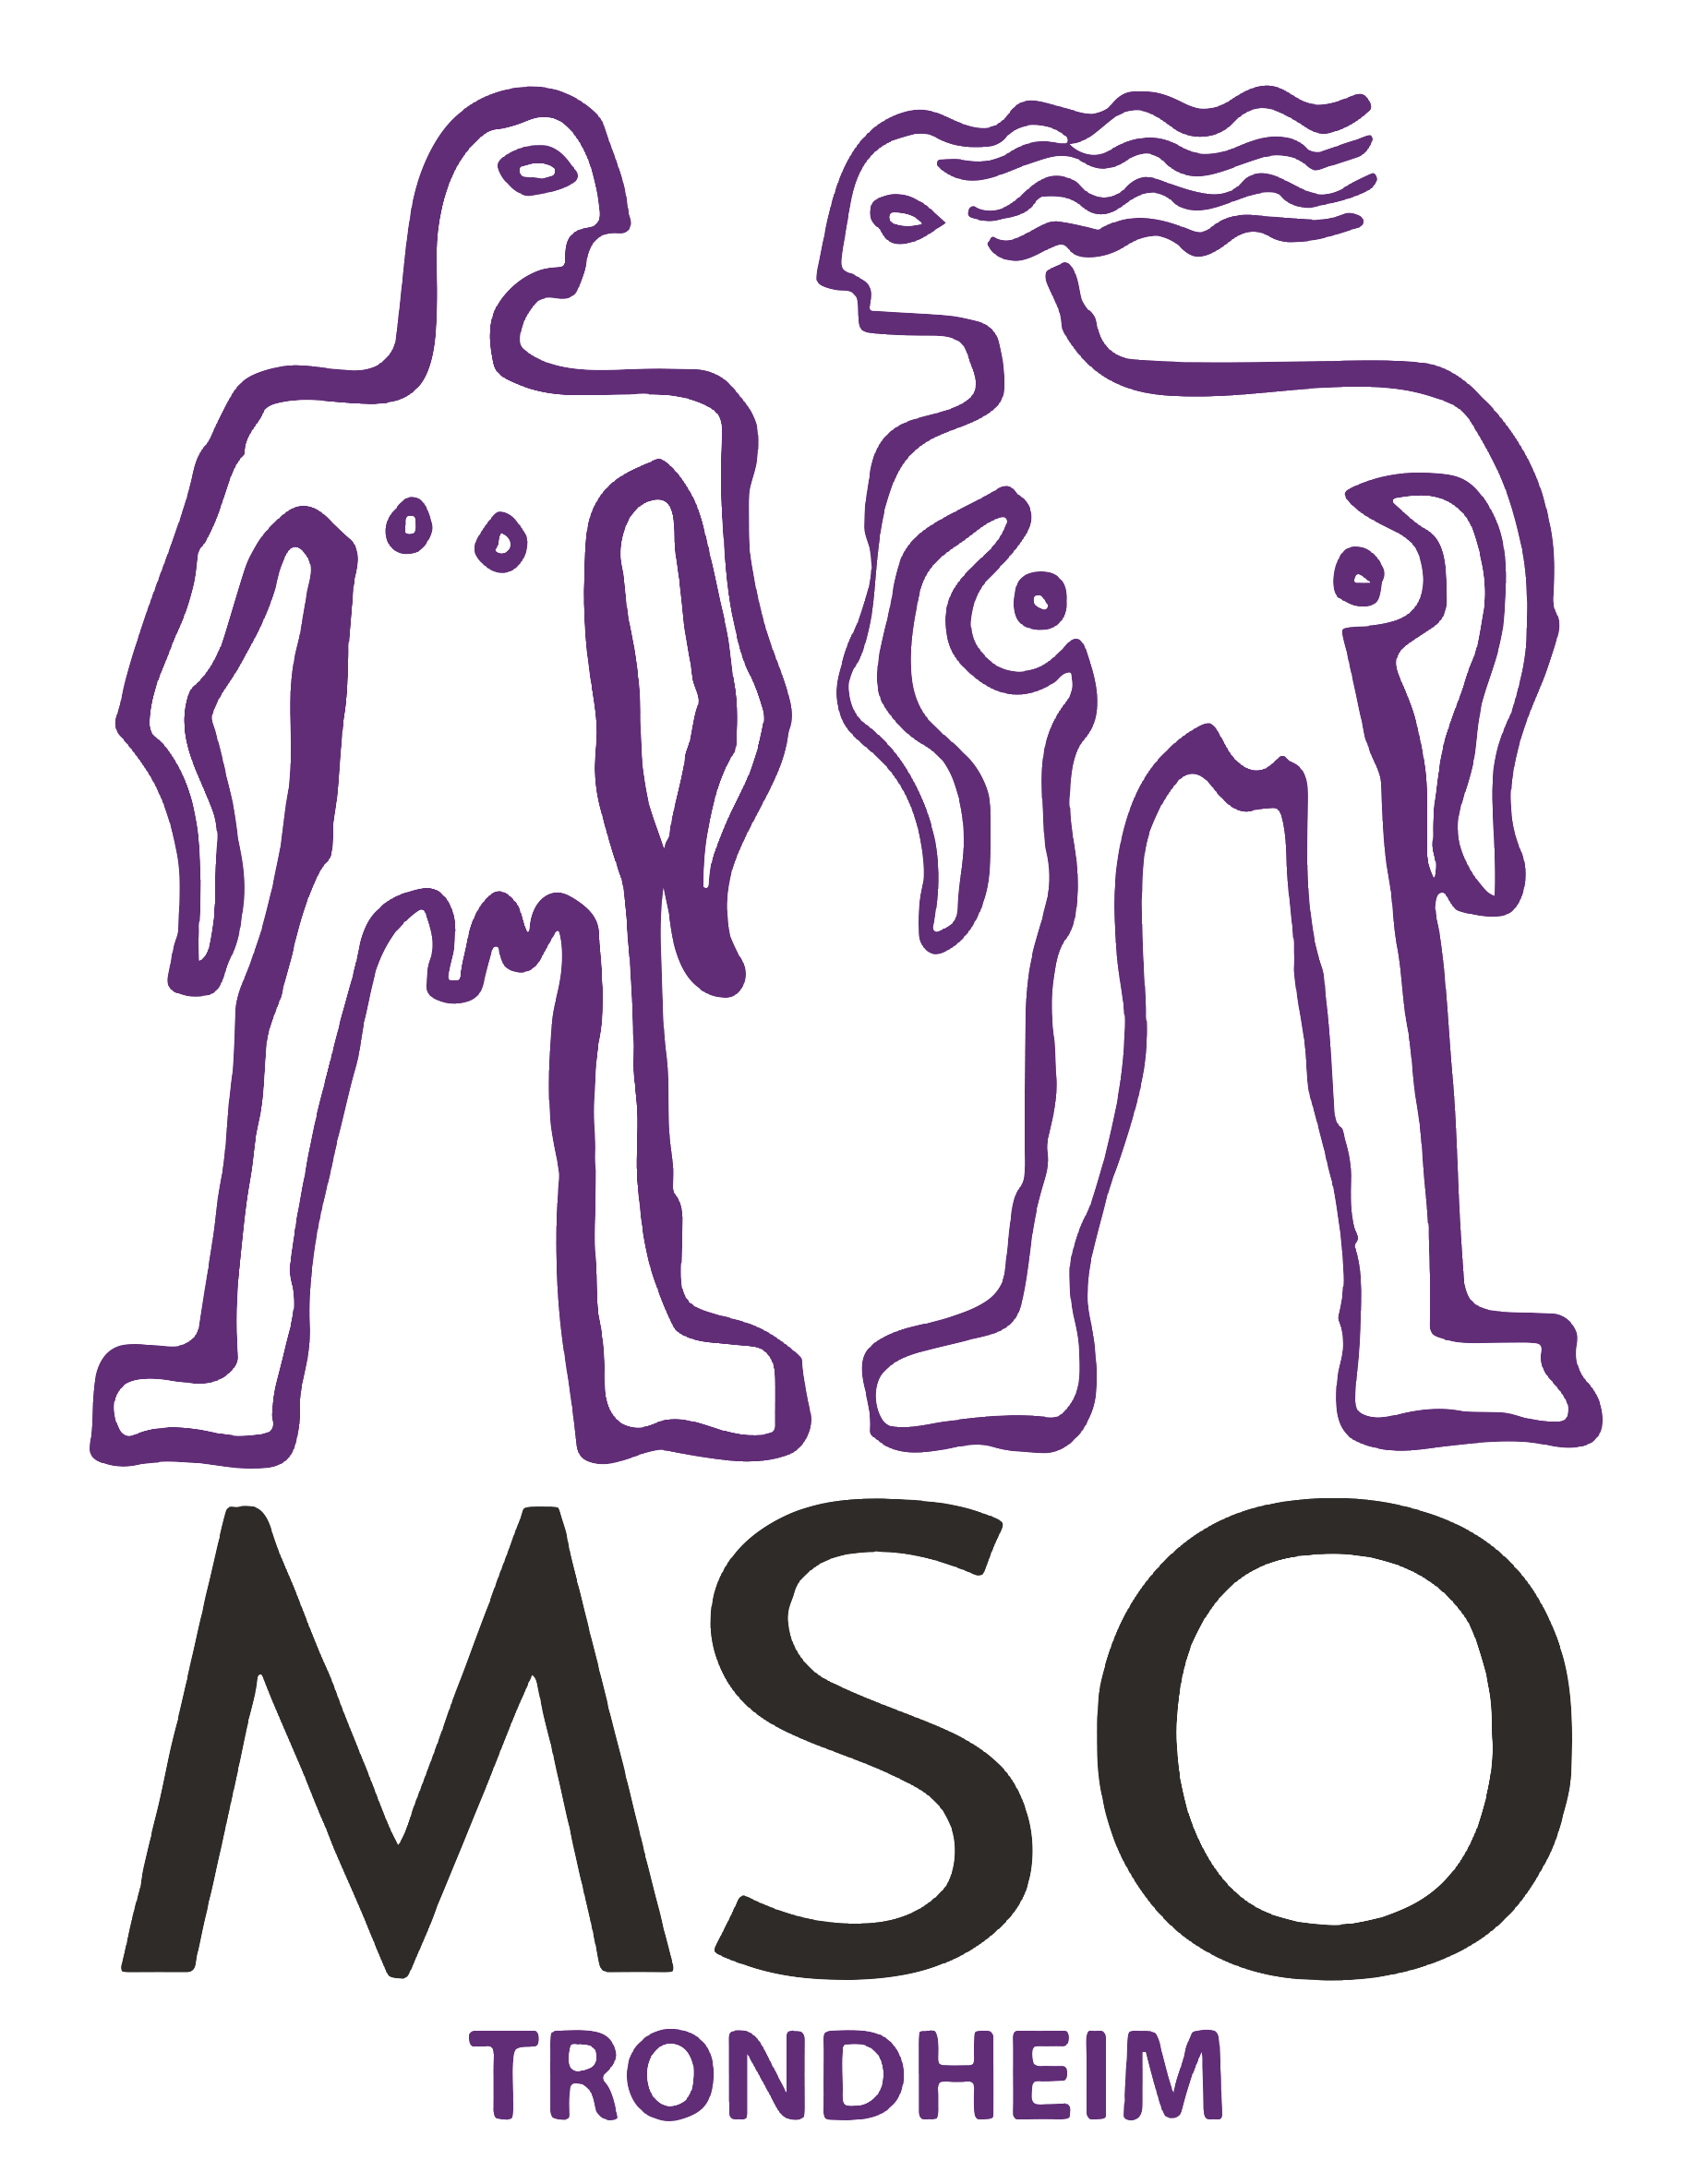 MSO logo